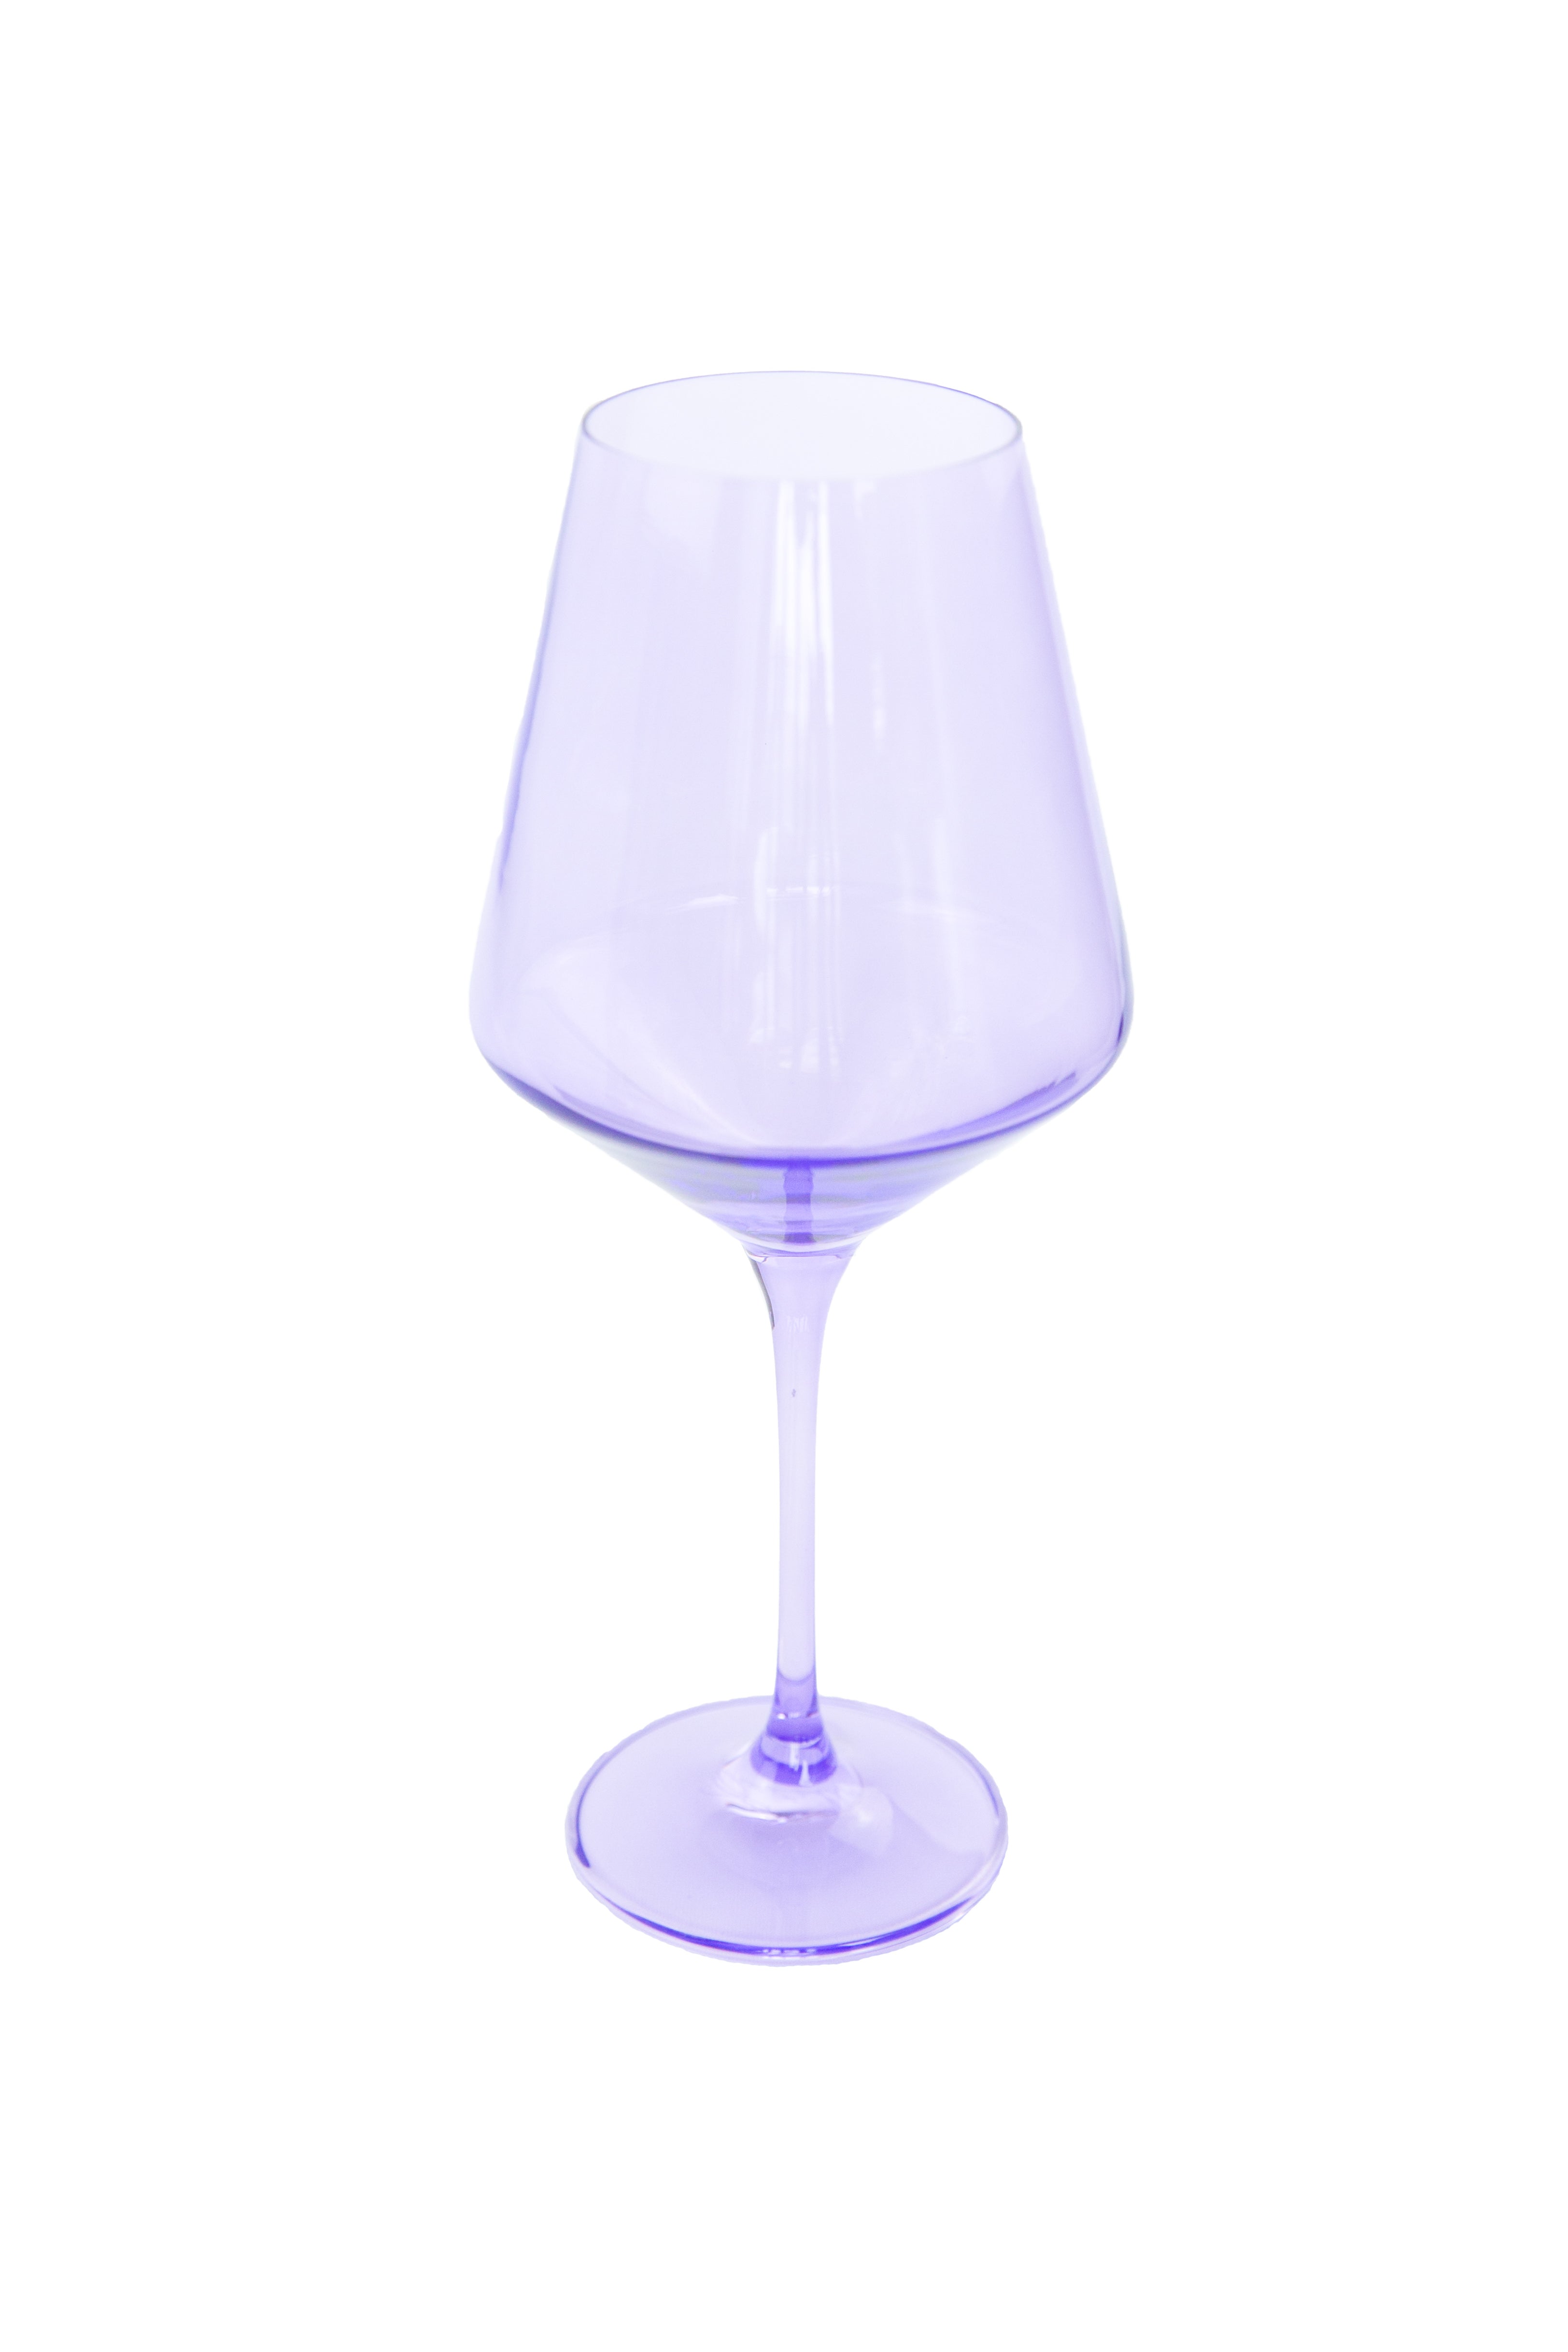 Estelle Colored Stemless Wine Glasses in Lavender - Set of 2